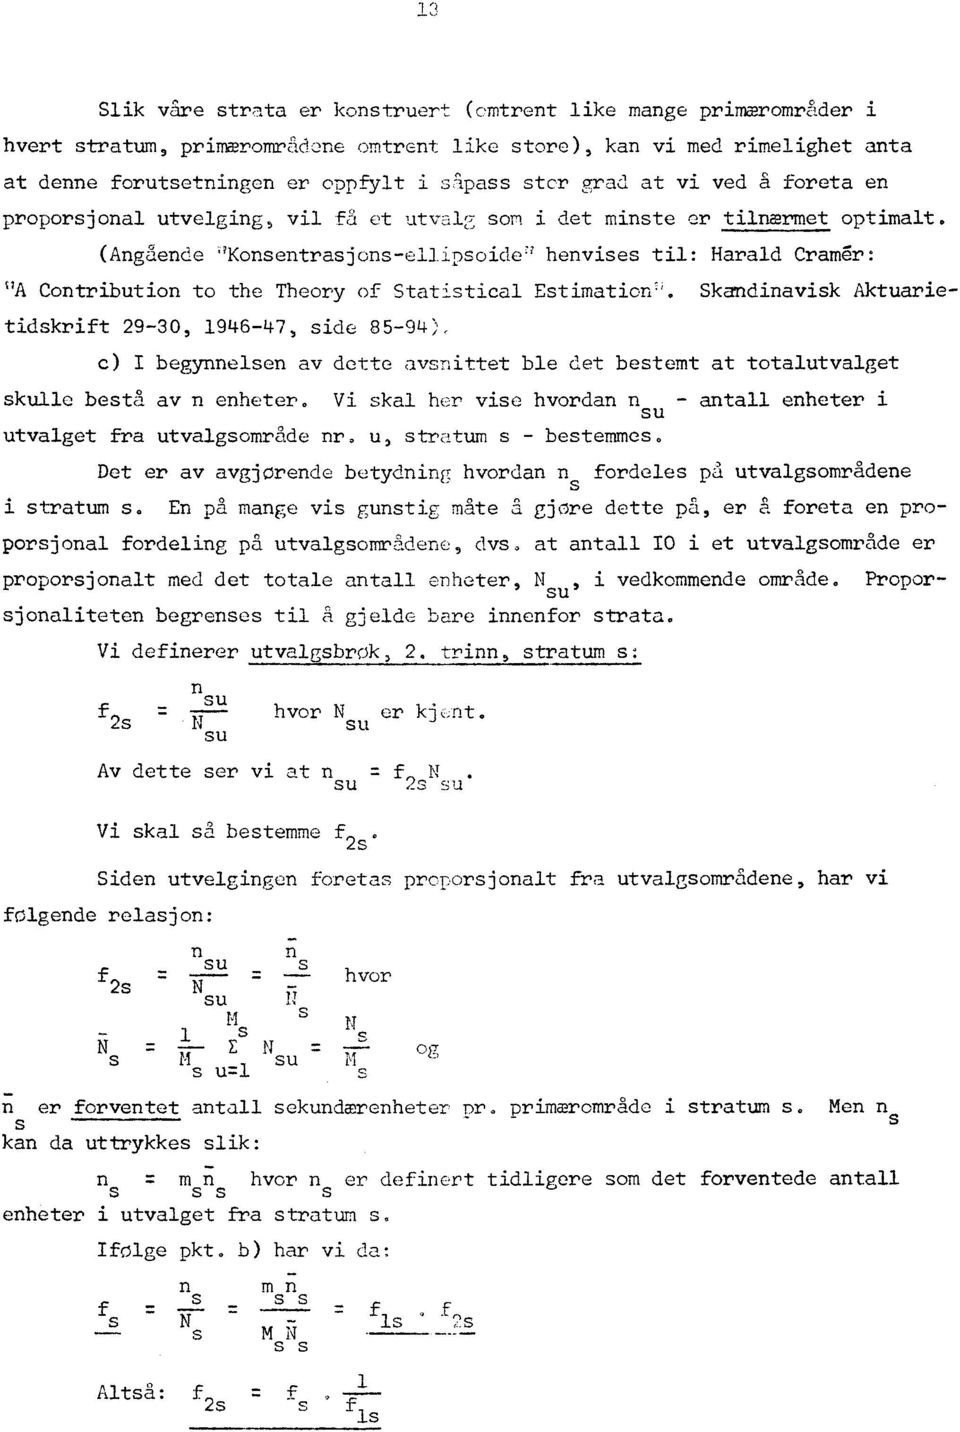 (Angående 'Konsentrasjons-ellipsoide' henvises til: Harald Cramér: "A Contribution to the Theory of Statistical Estimation'.